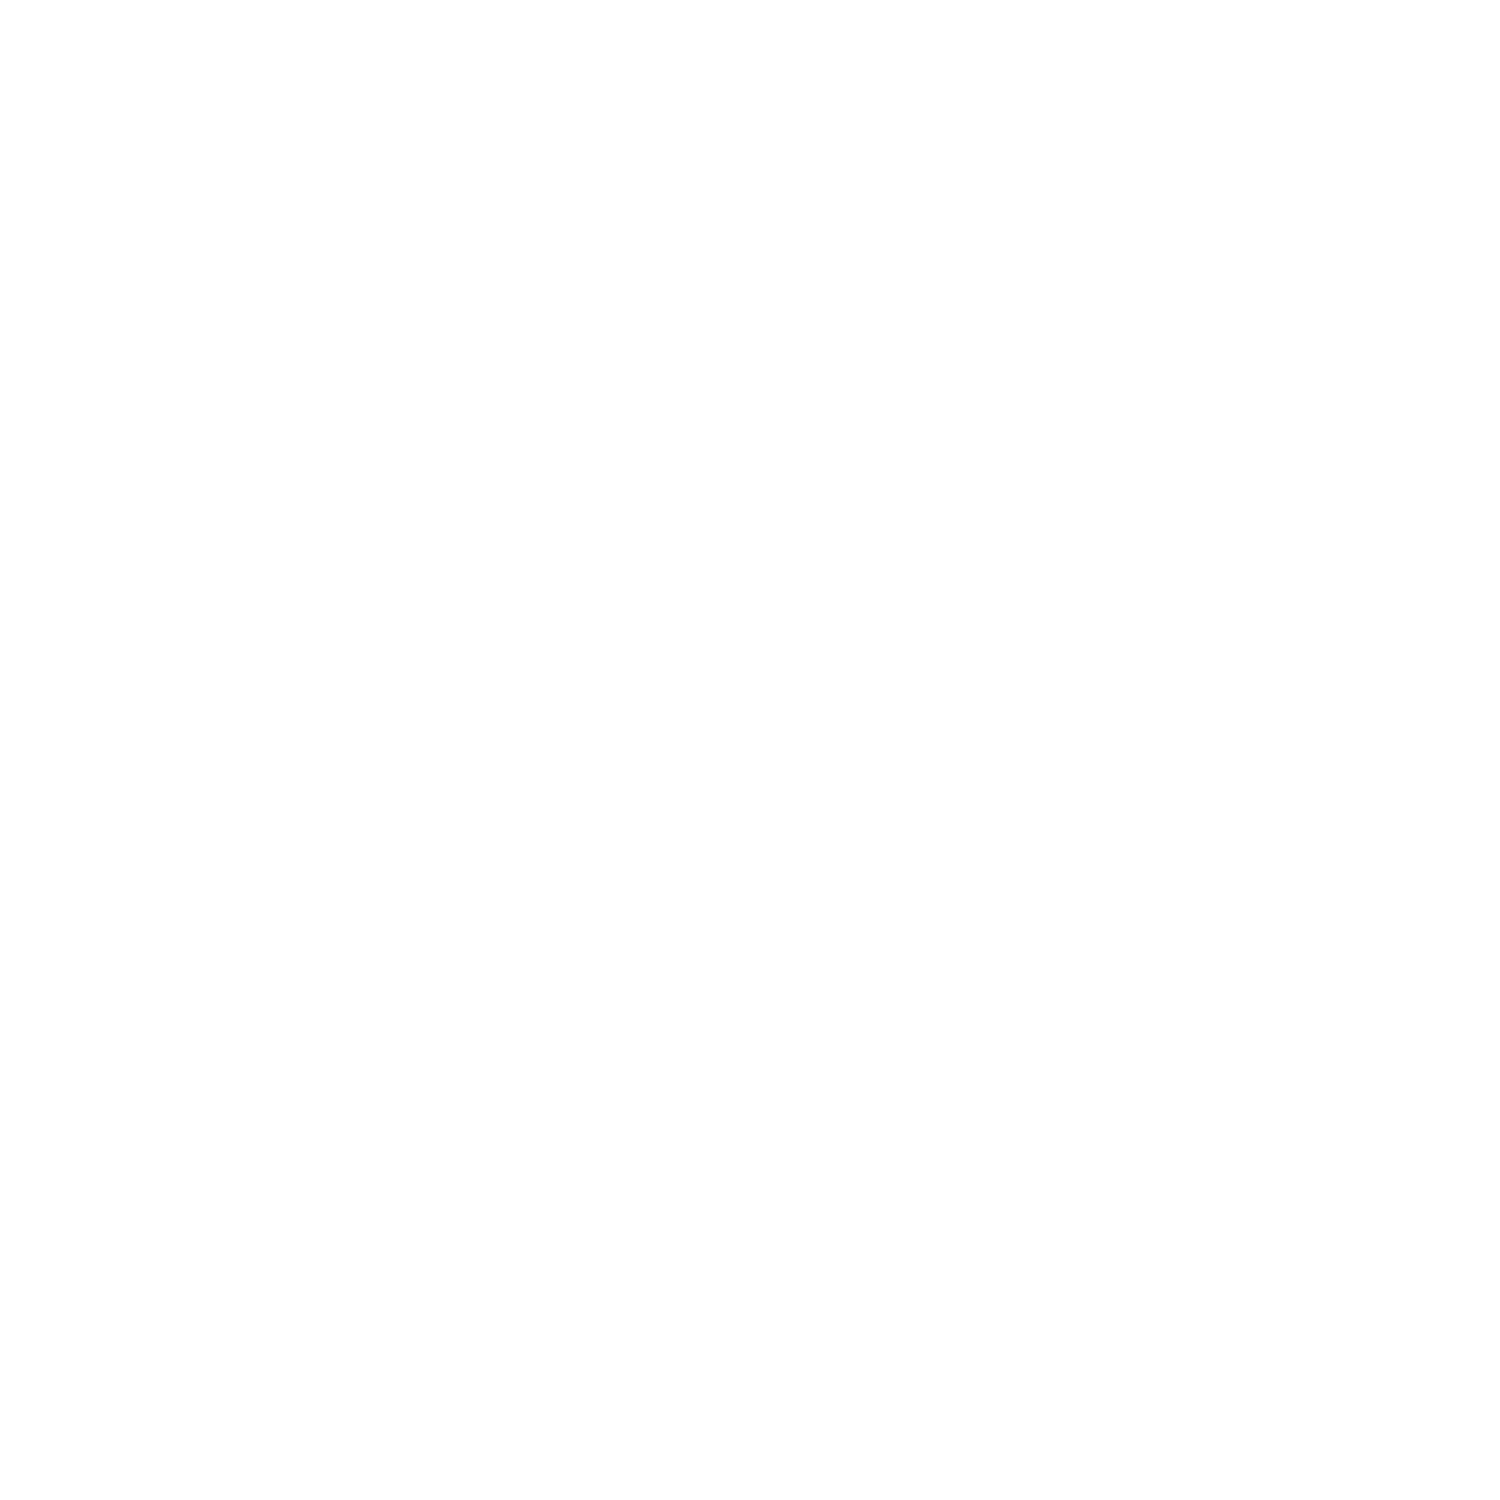 Alek Keytiyev